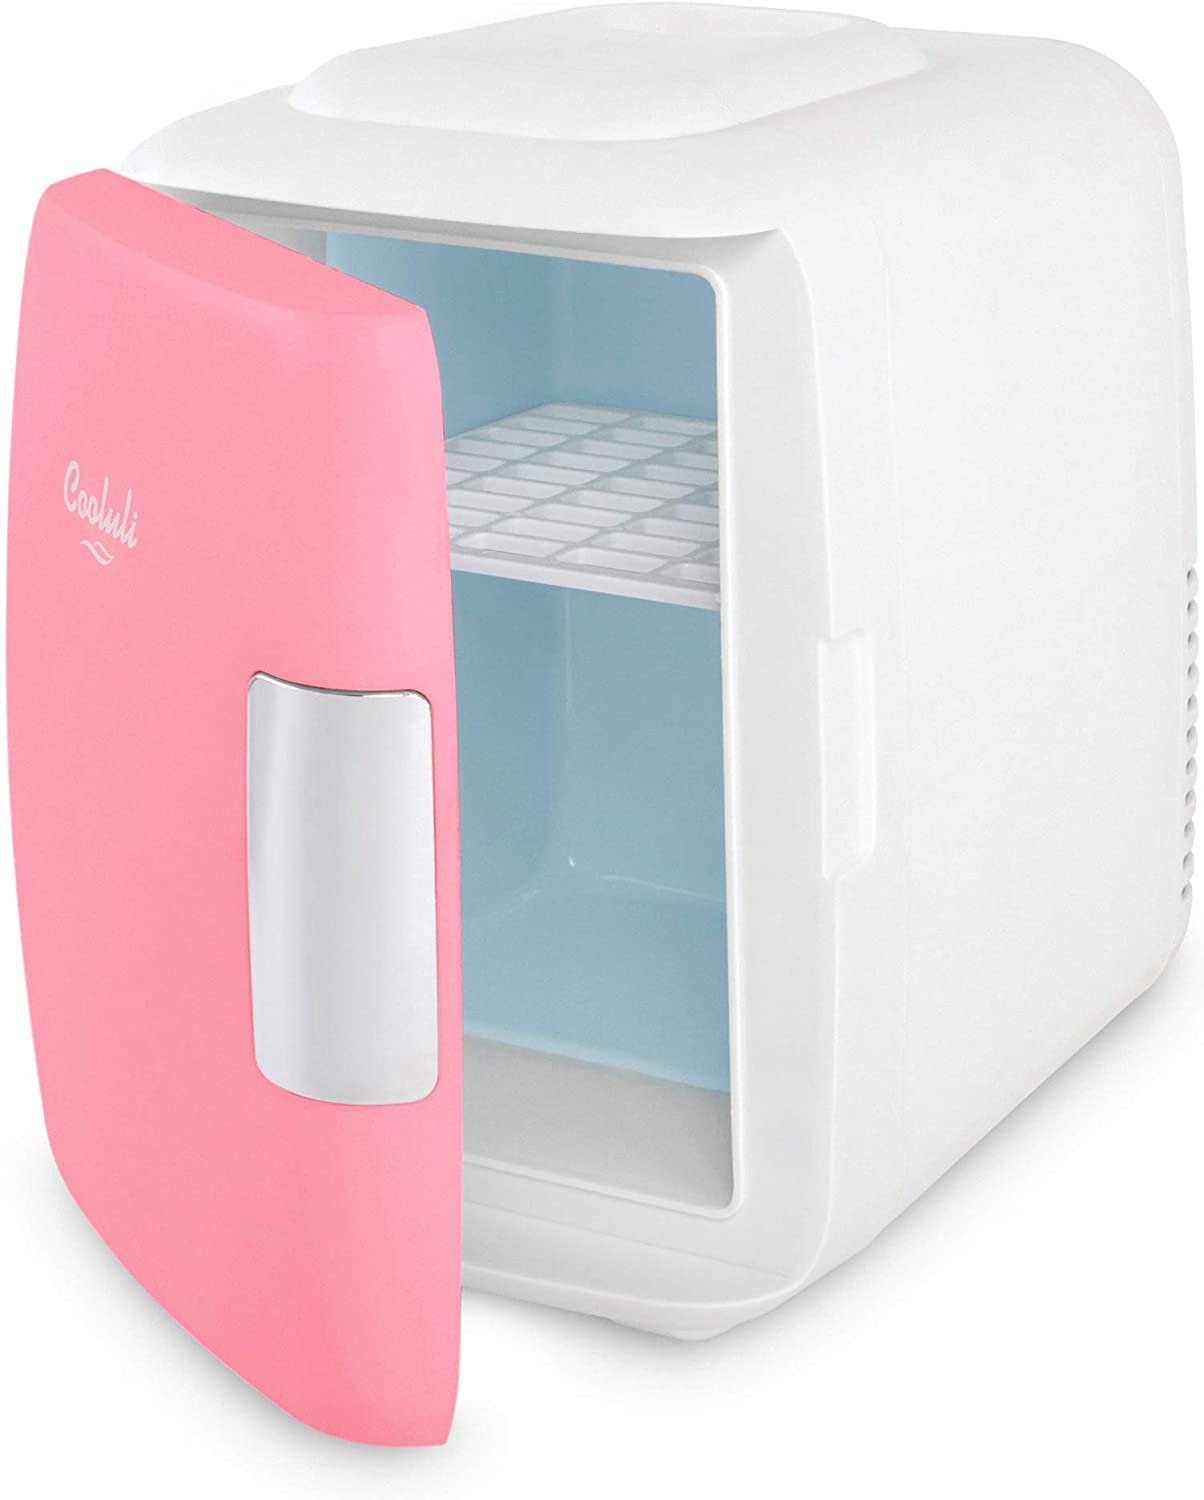 Cooluli Beauty Pink 4-liter Skincare Fridge Review 2022